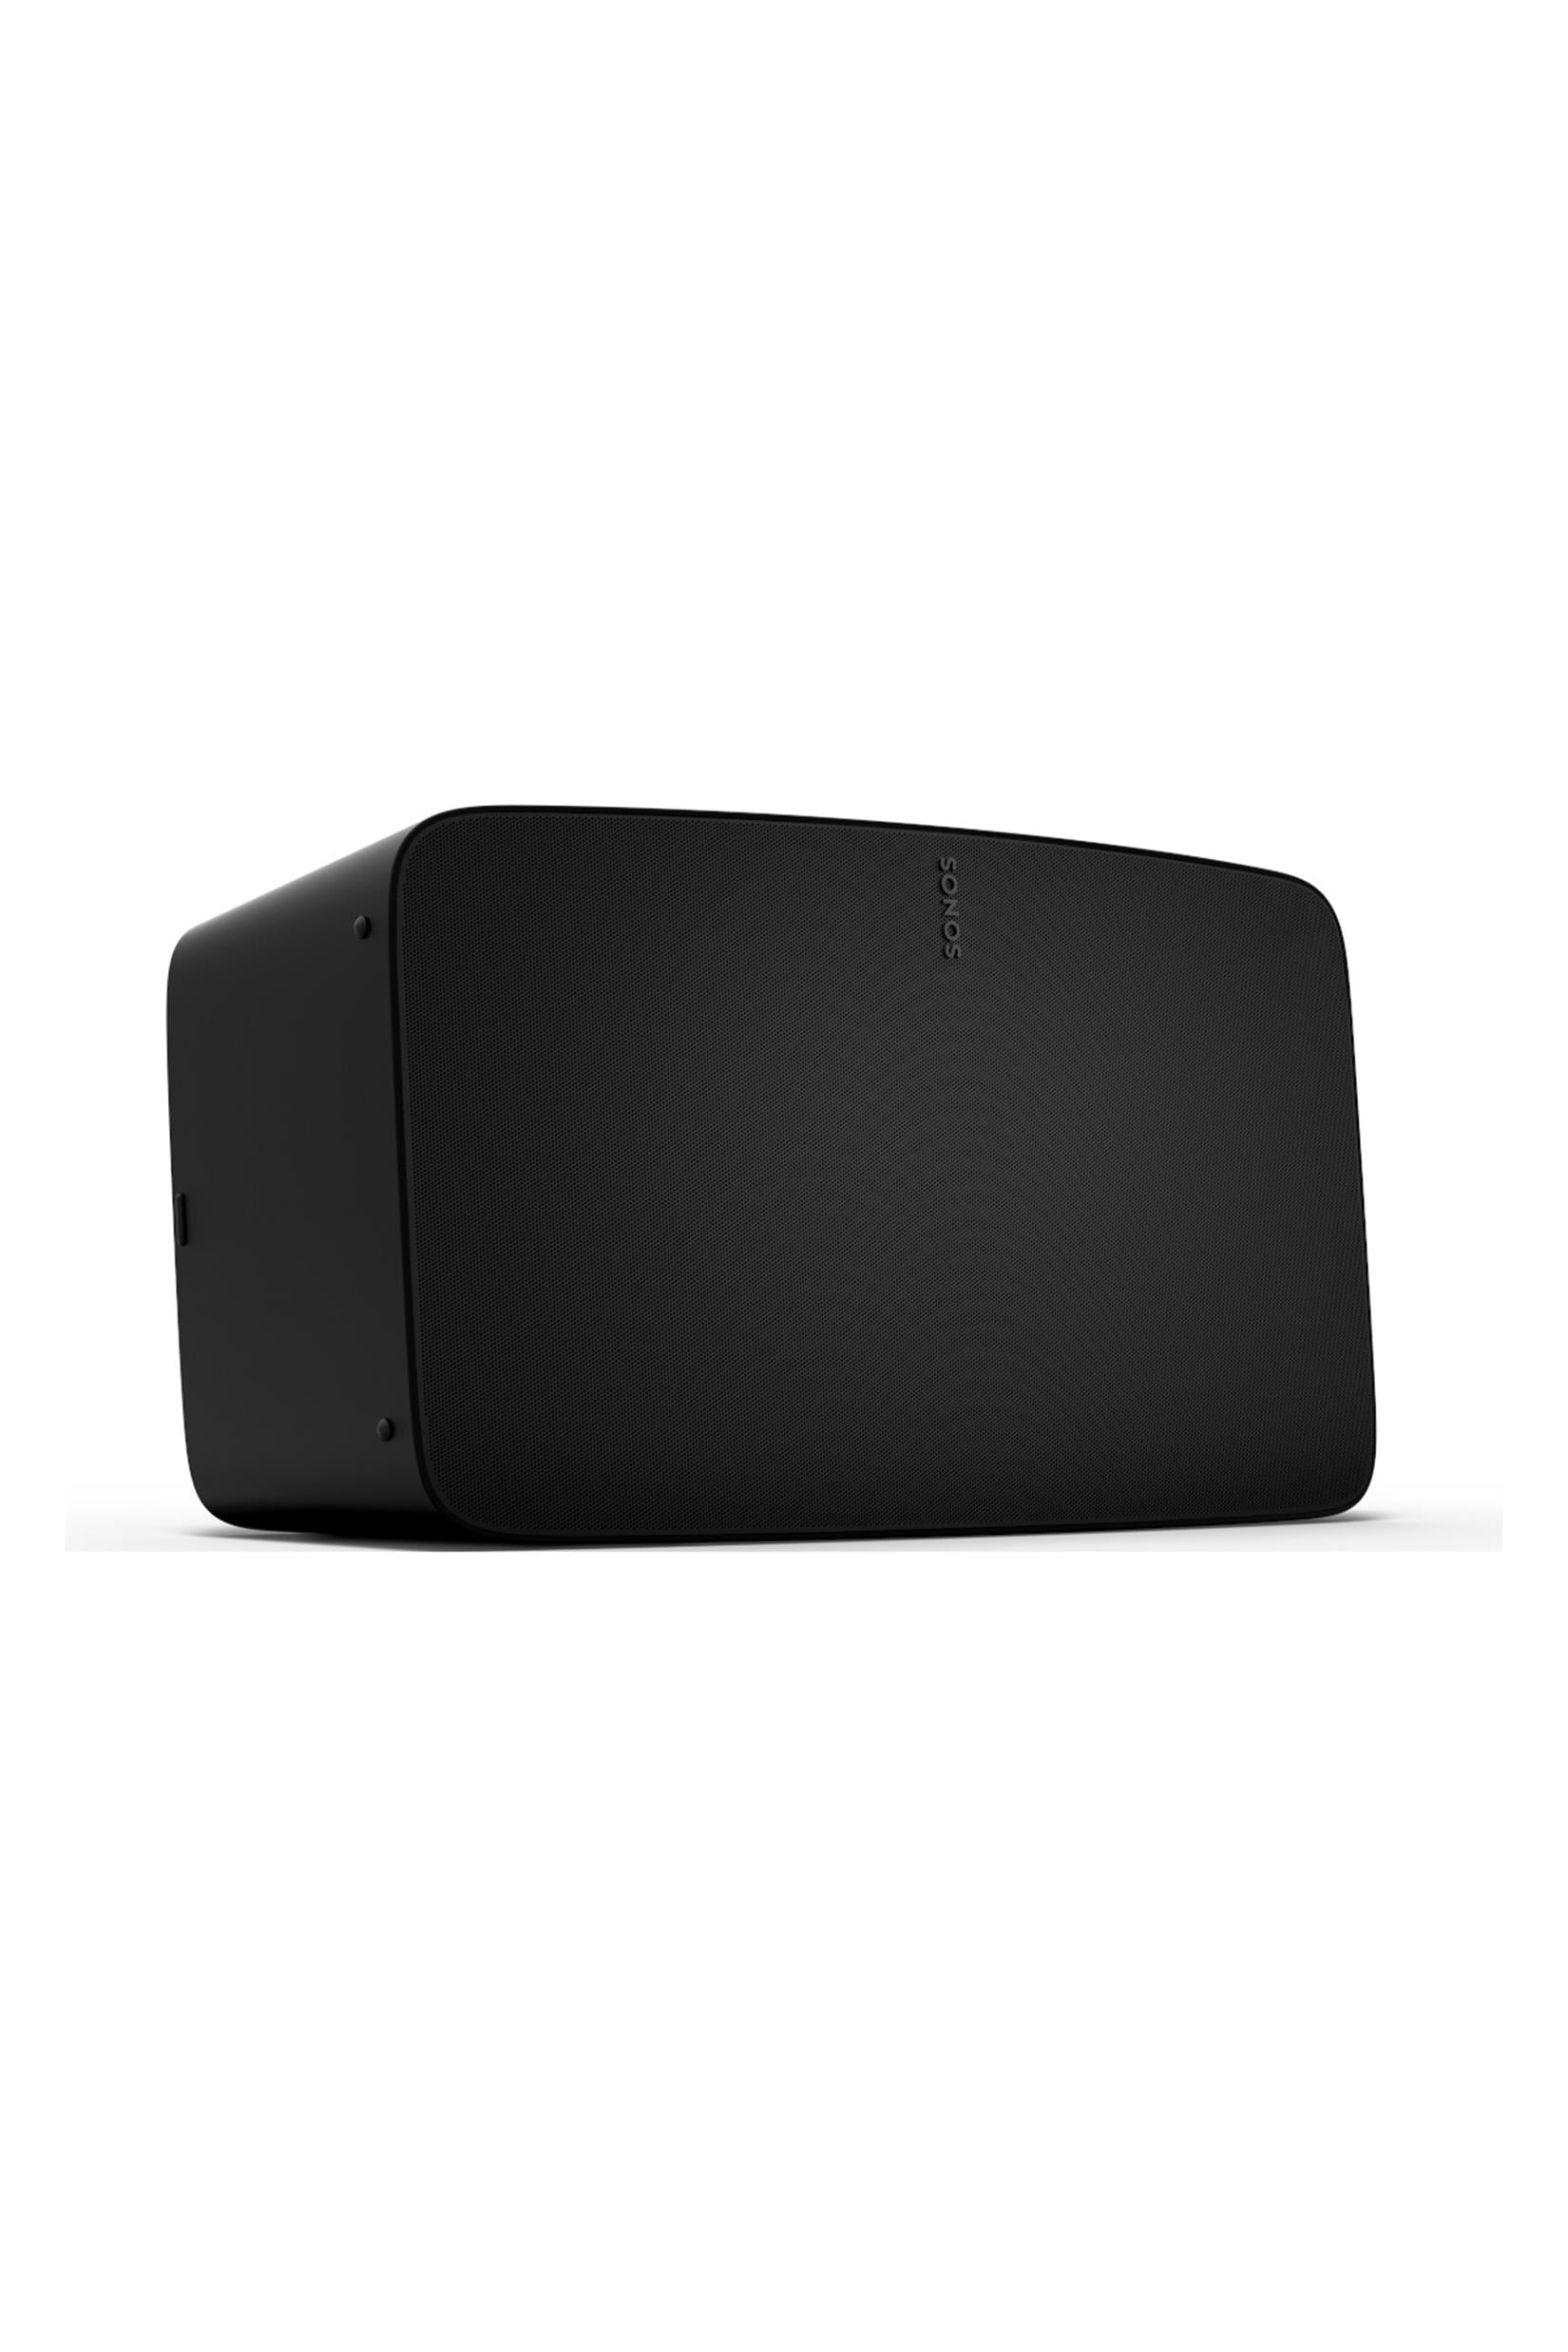 Sonos Five Wireless Speaker for Streaming Music (Black) -